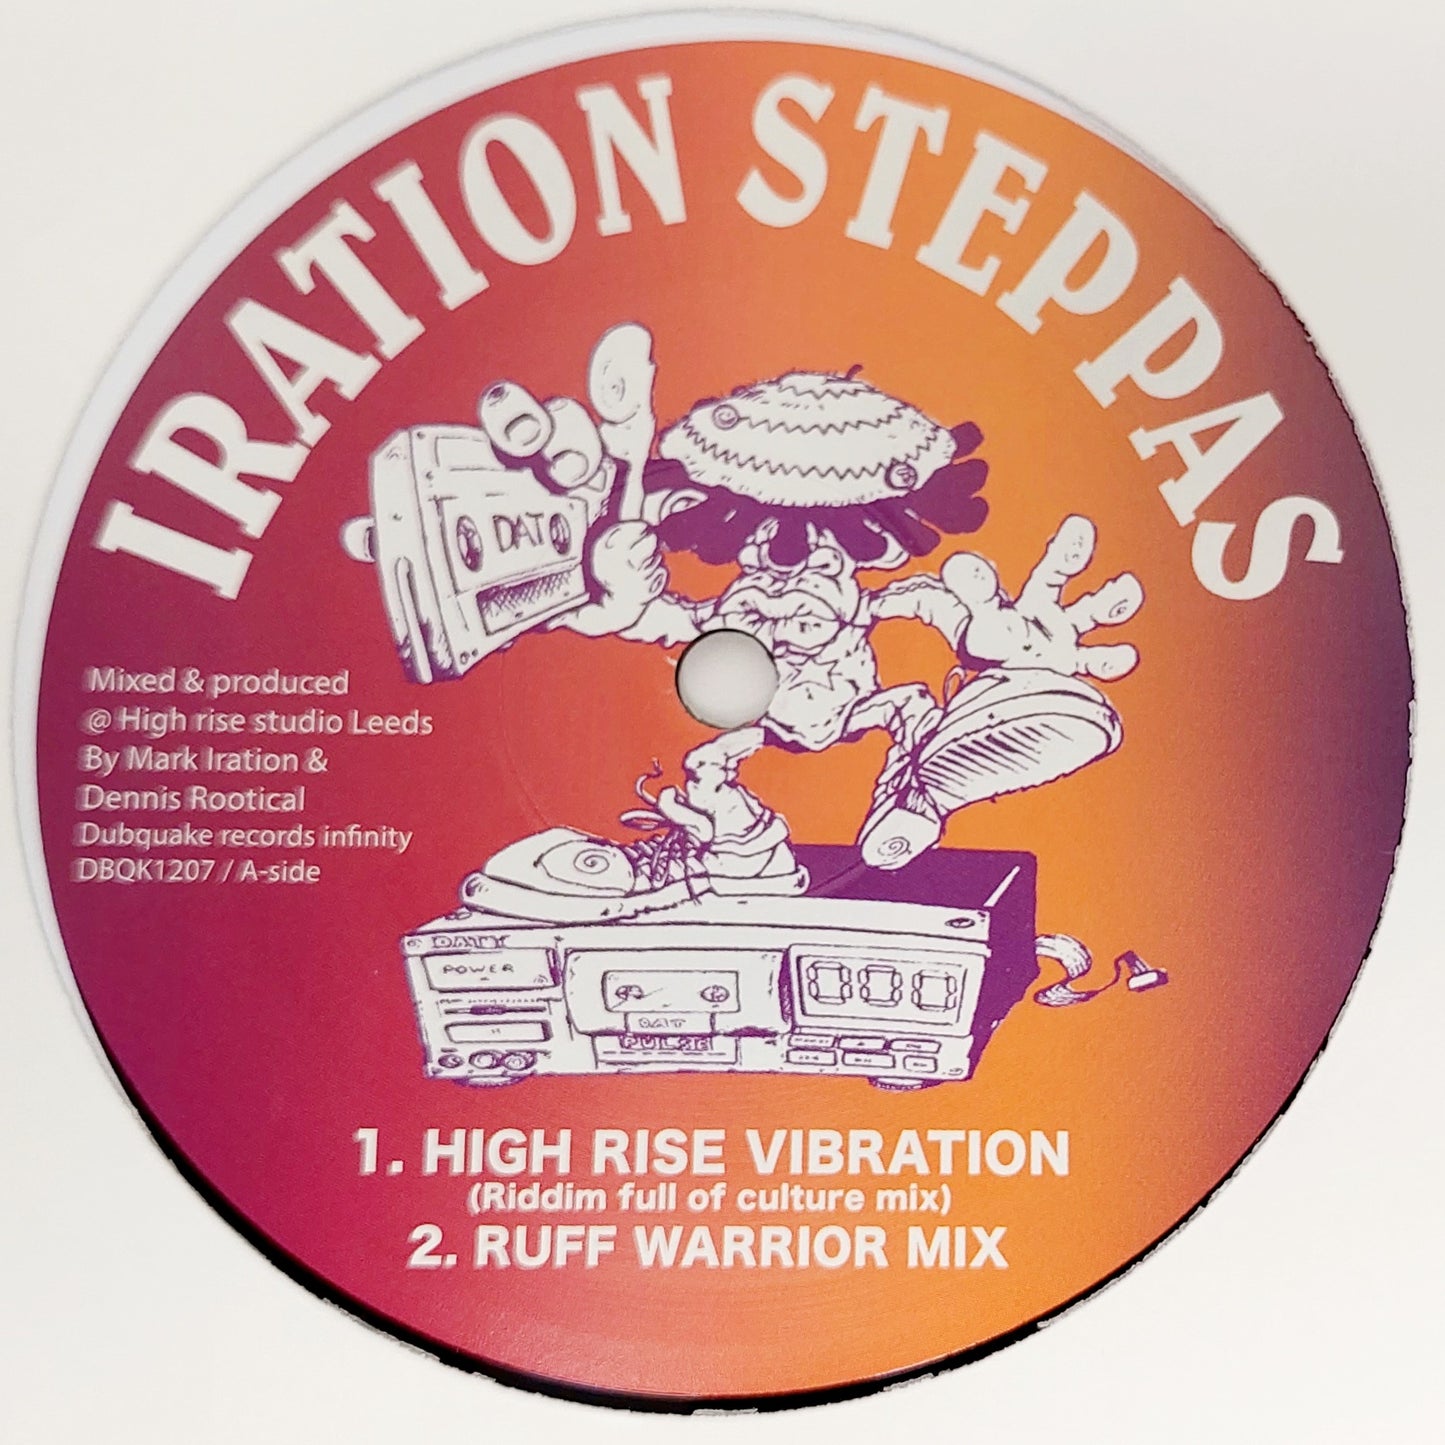 Iration Steppas - High Rise Vibration